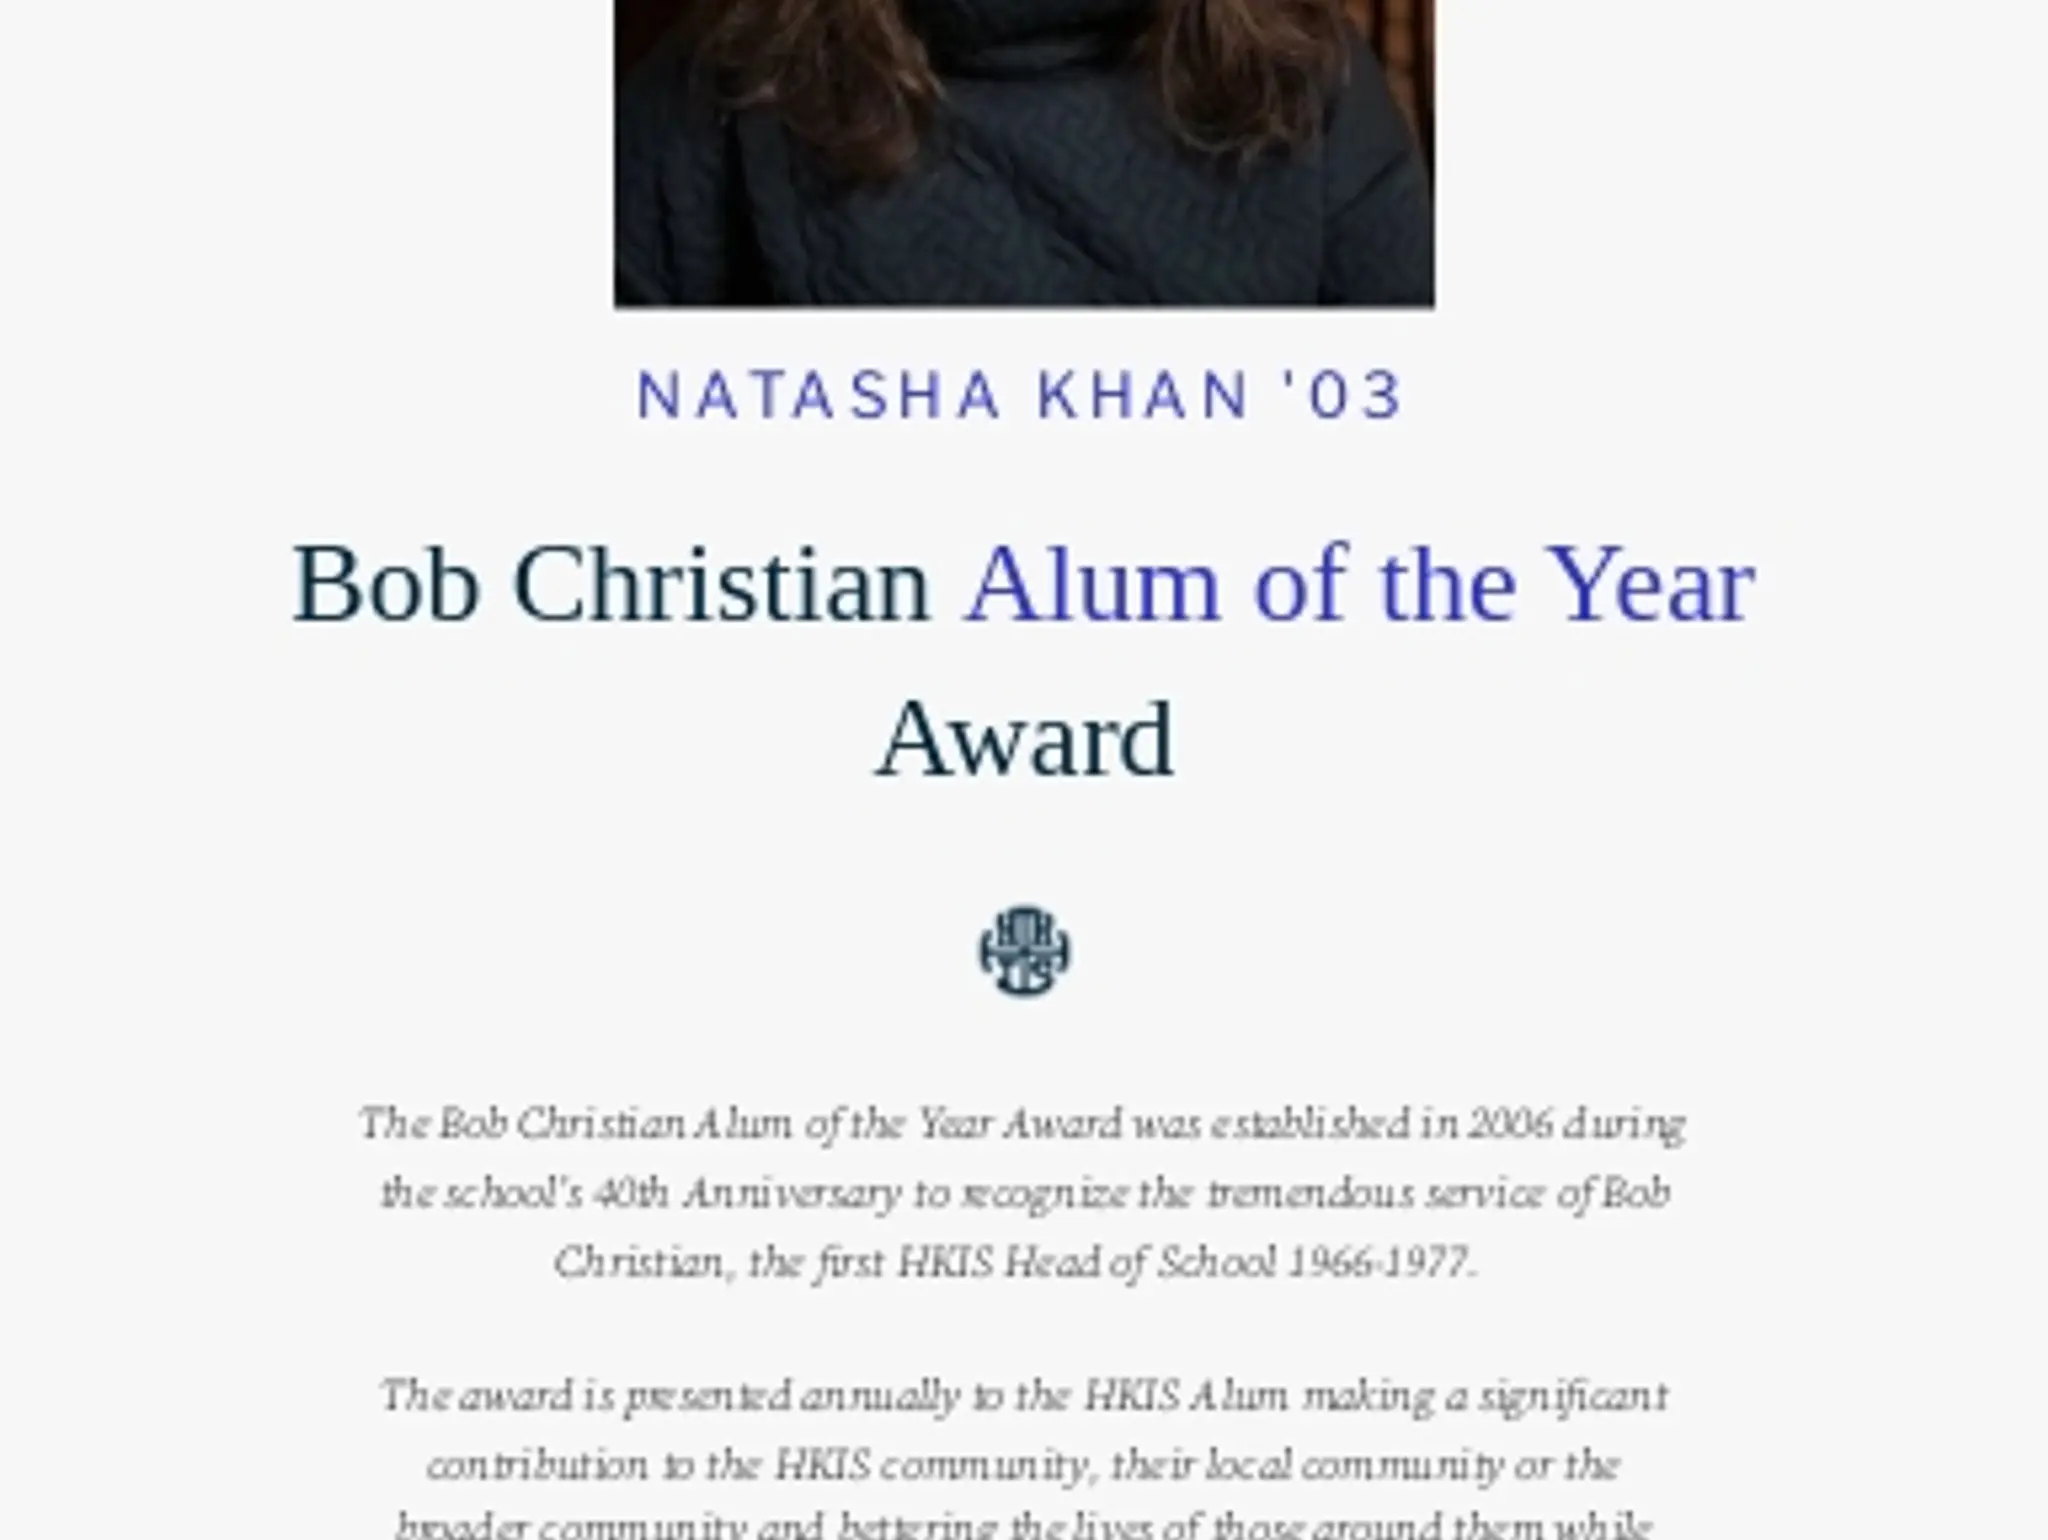 Bob Christian Alum of the Year Award: Natasha Khan '03